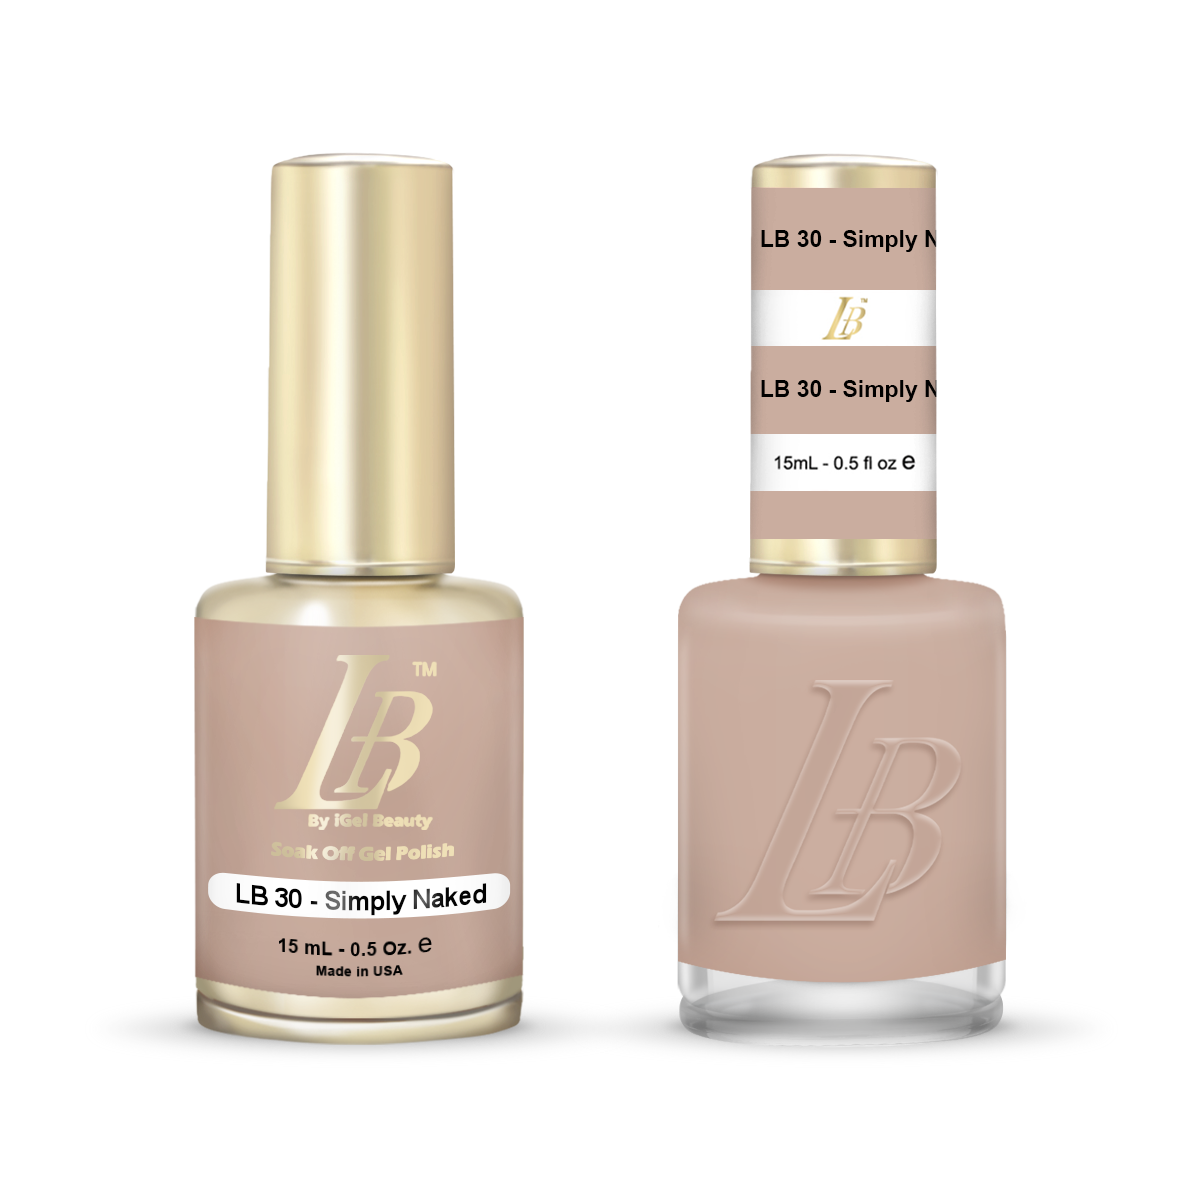 LB Duo - LB030 Simply Naked